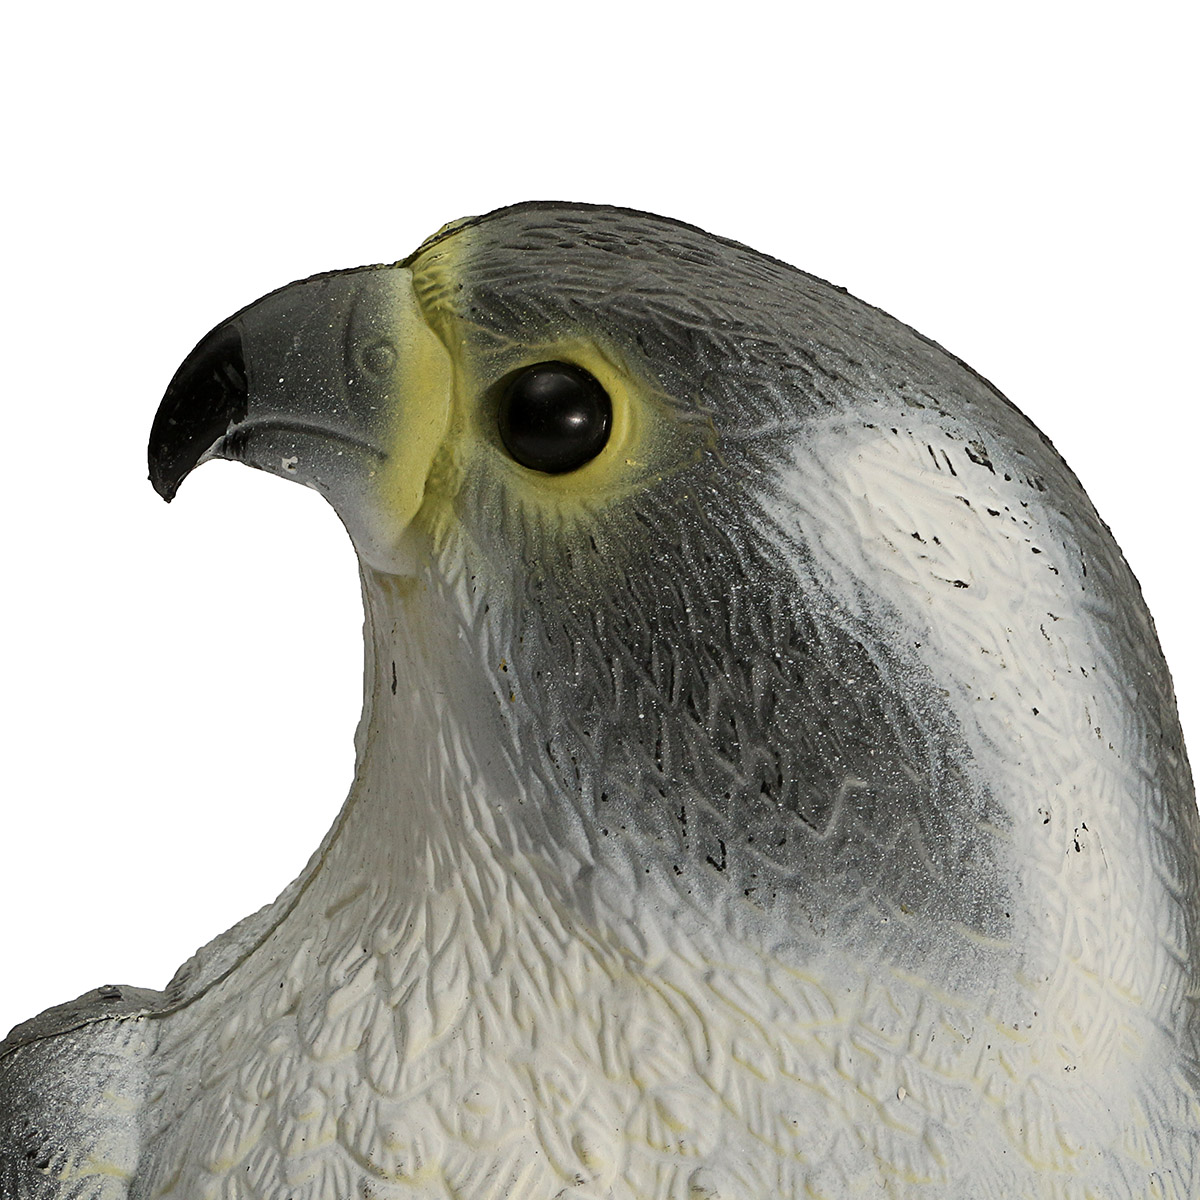 Simulation-Falcon-Hawk-Decoy-Bird-Pigeon-Deterrent-Scarer-Repeller-Garden-Lawn-Decor-Hallowmas-Decor-1084916-6